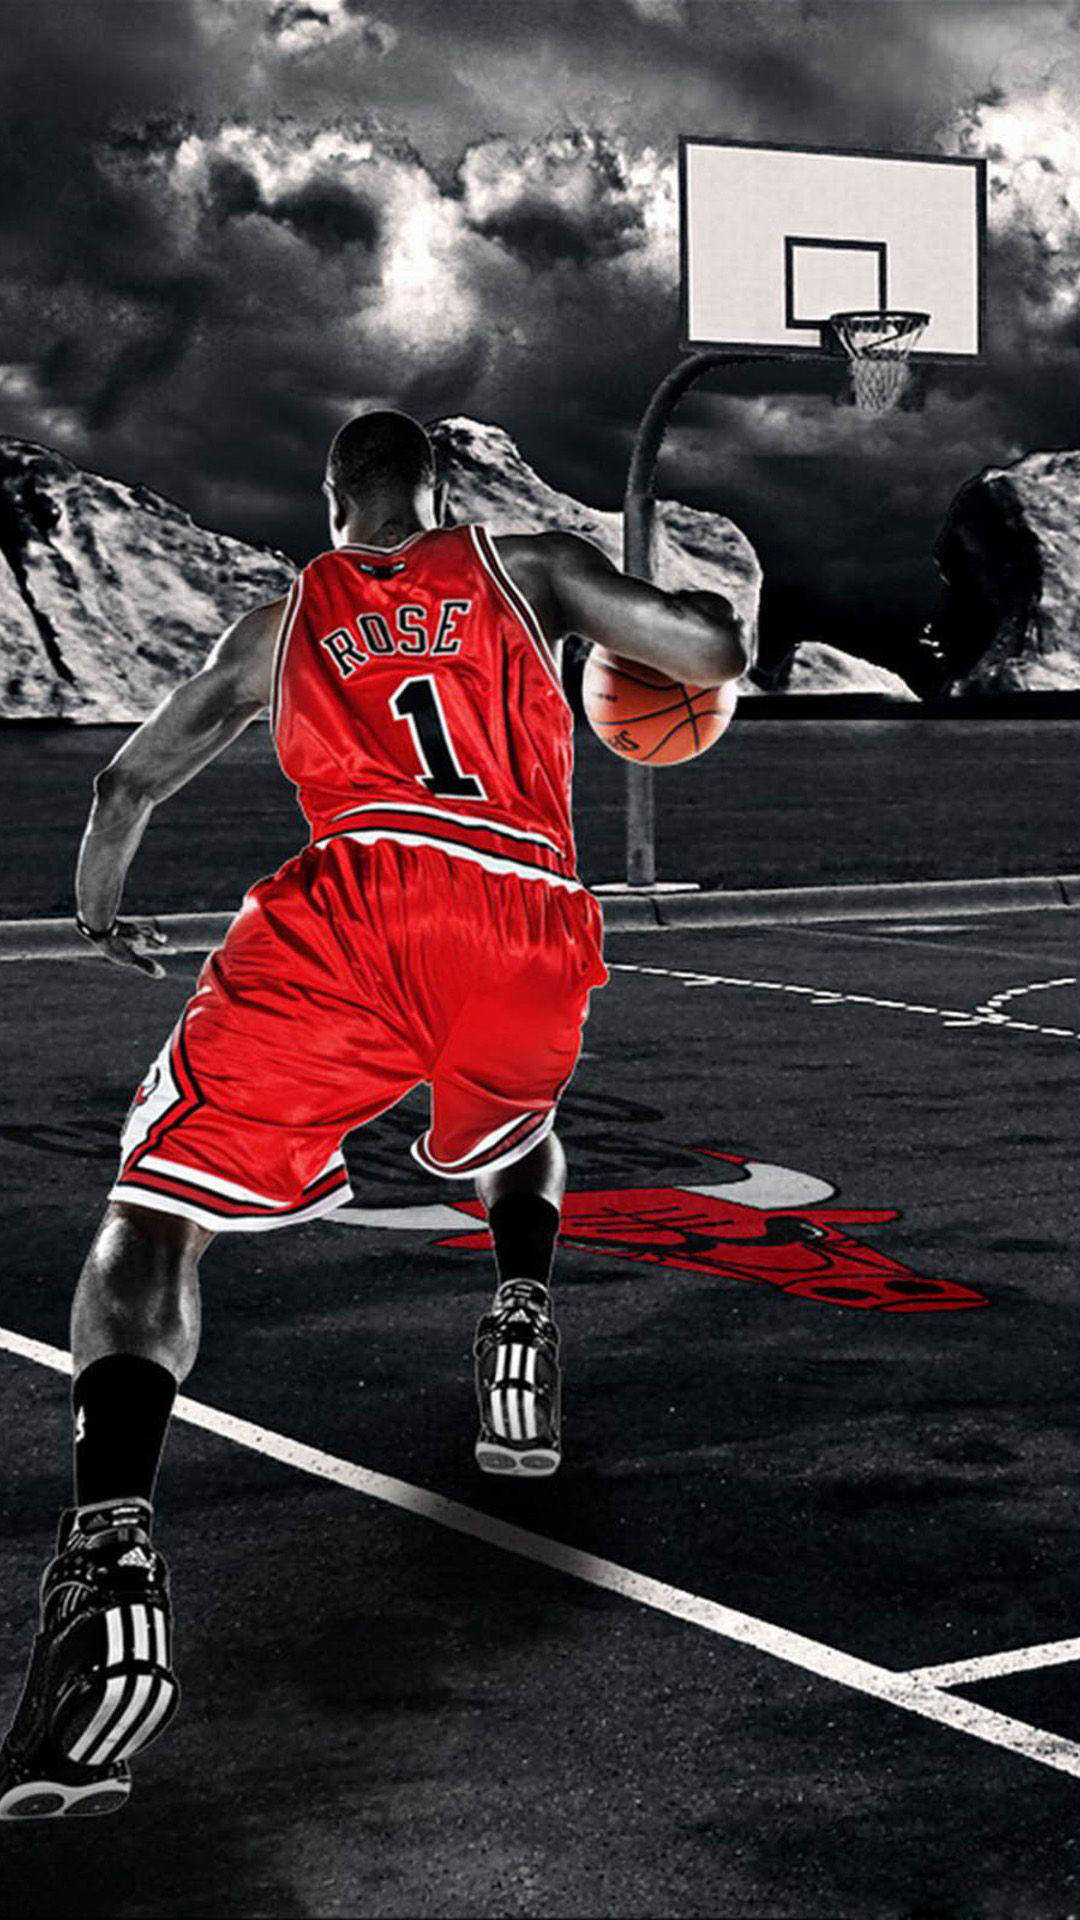 American Professional Basketball Player Derrick Rose Driving Sports iPhone Wallpaper